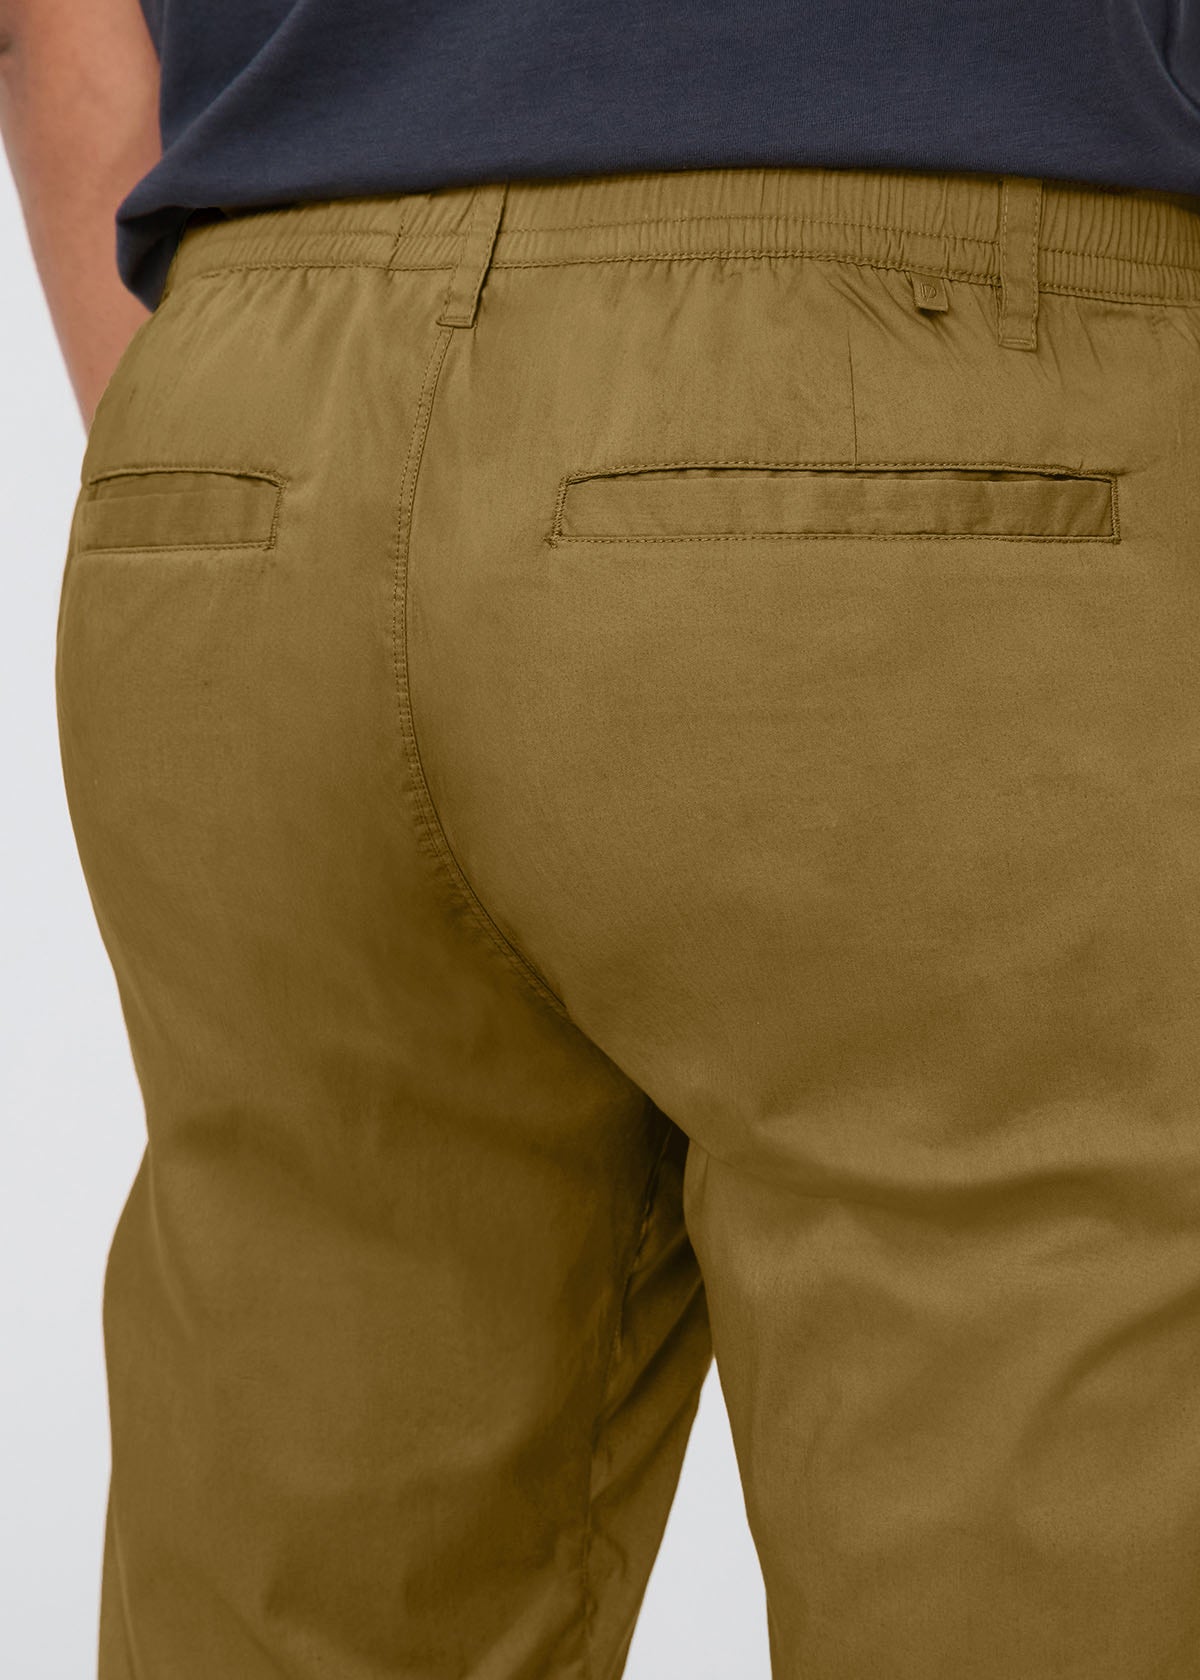 mens brown lightweight summer travel pants back waistband and pocket